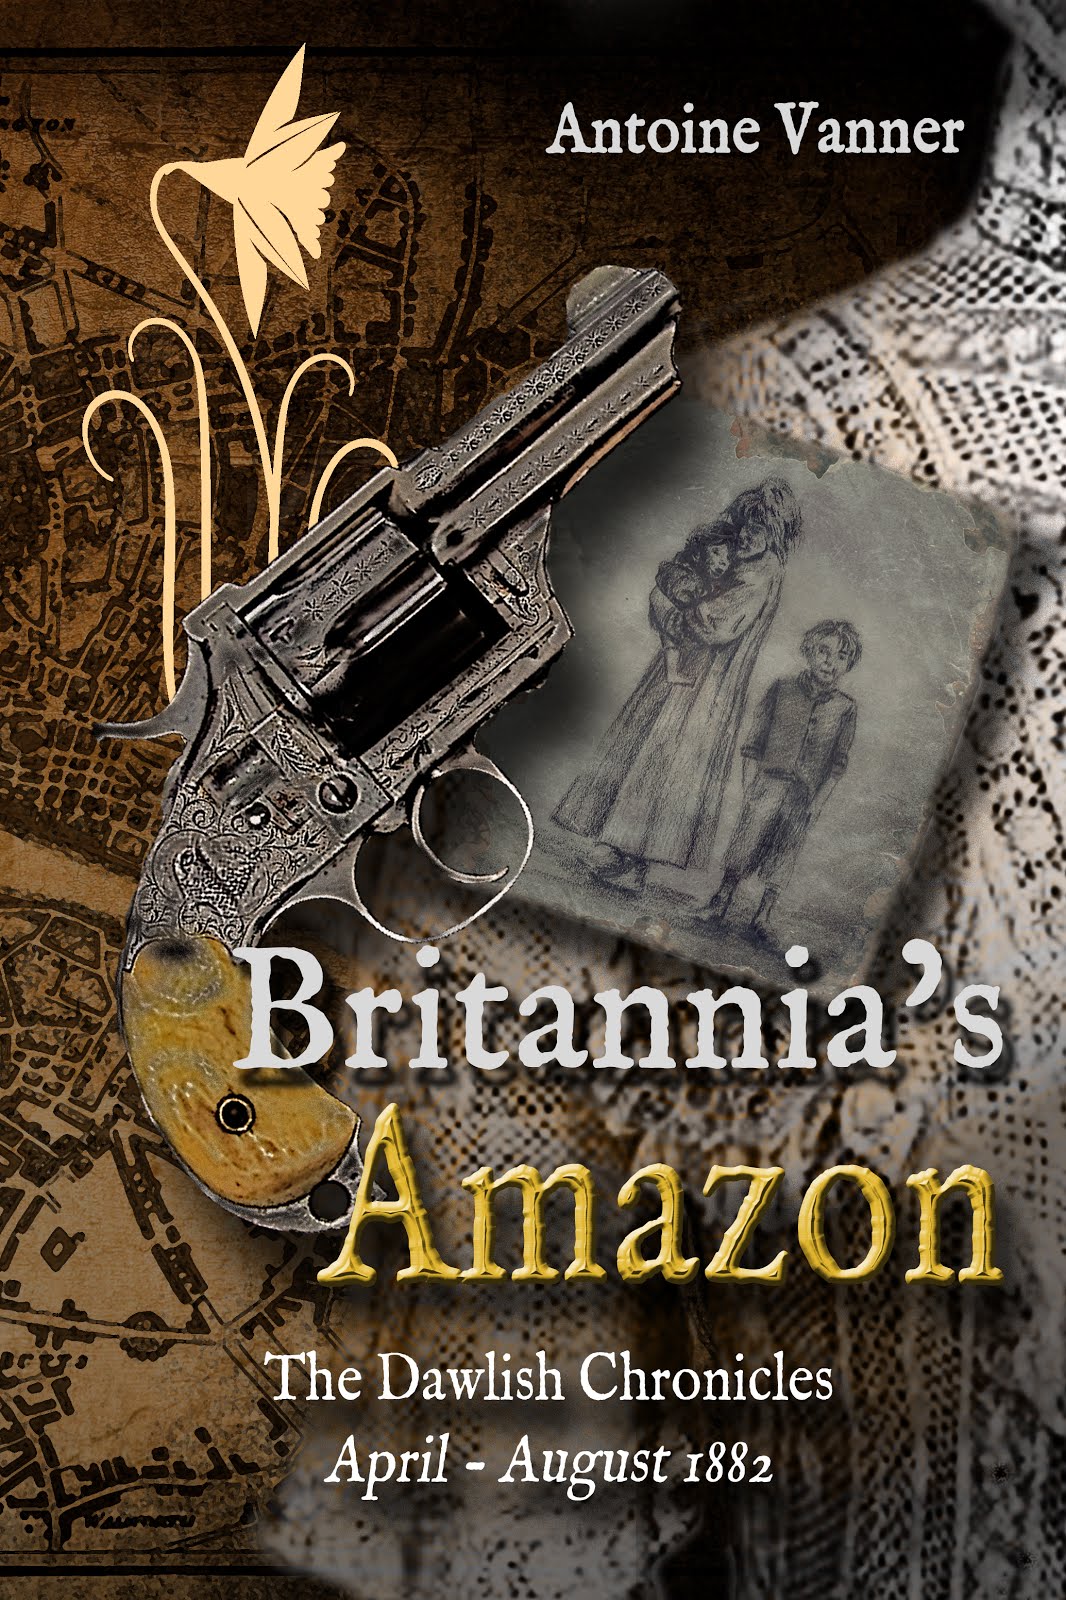 To buy "Britannia's Amazon" click on image below